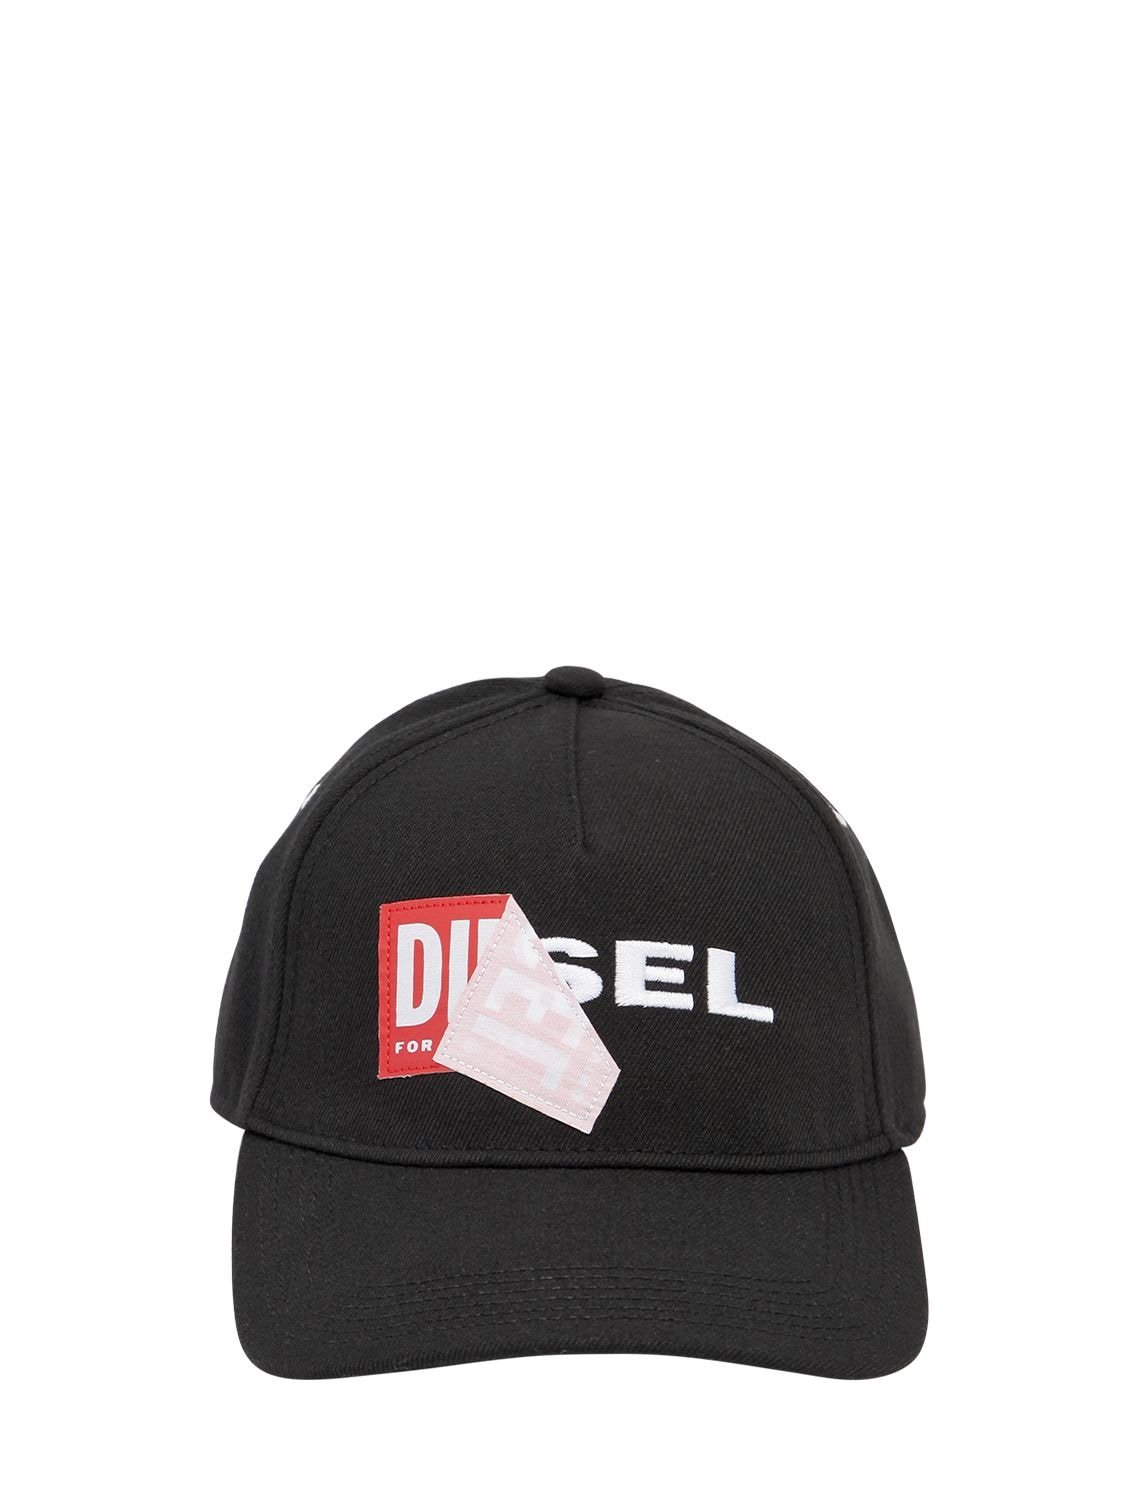 DIESEL REWORKED LOGO BASEBALL HAT,67IBQT007-OTAw0